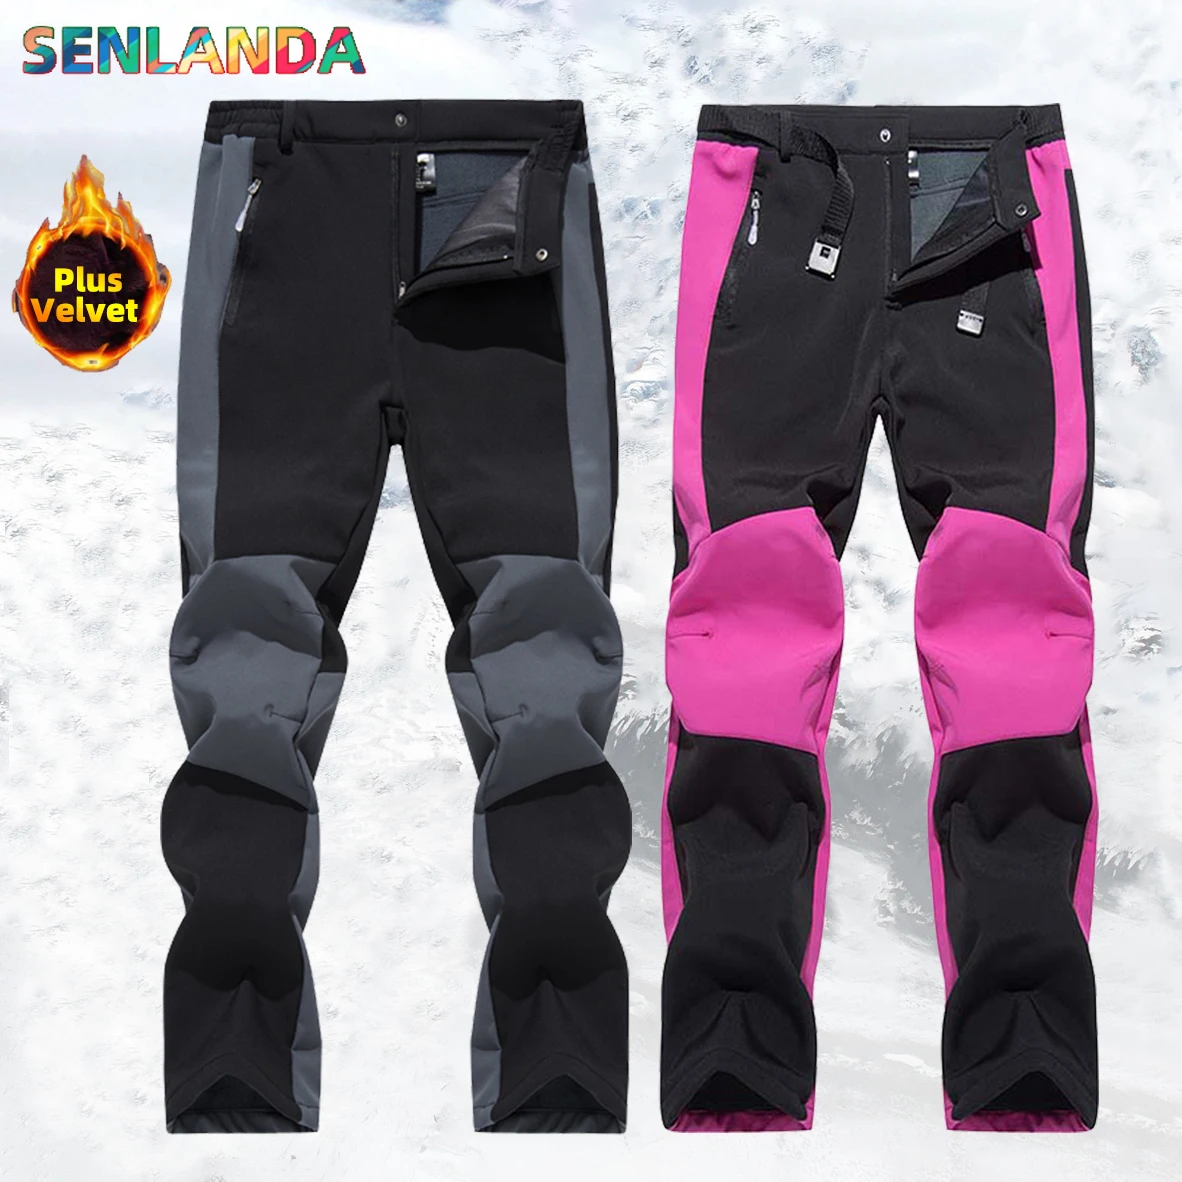 

SENLANDA Men Women Winter Outdoor Plus Velvet Softshell Hiking Pants Warm Fleece Mountain Skiing Camping Trekking Sport Trousers